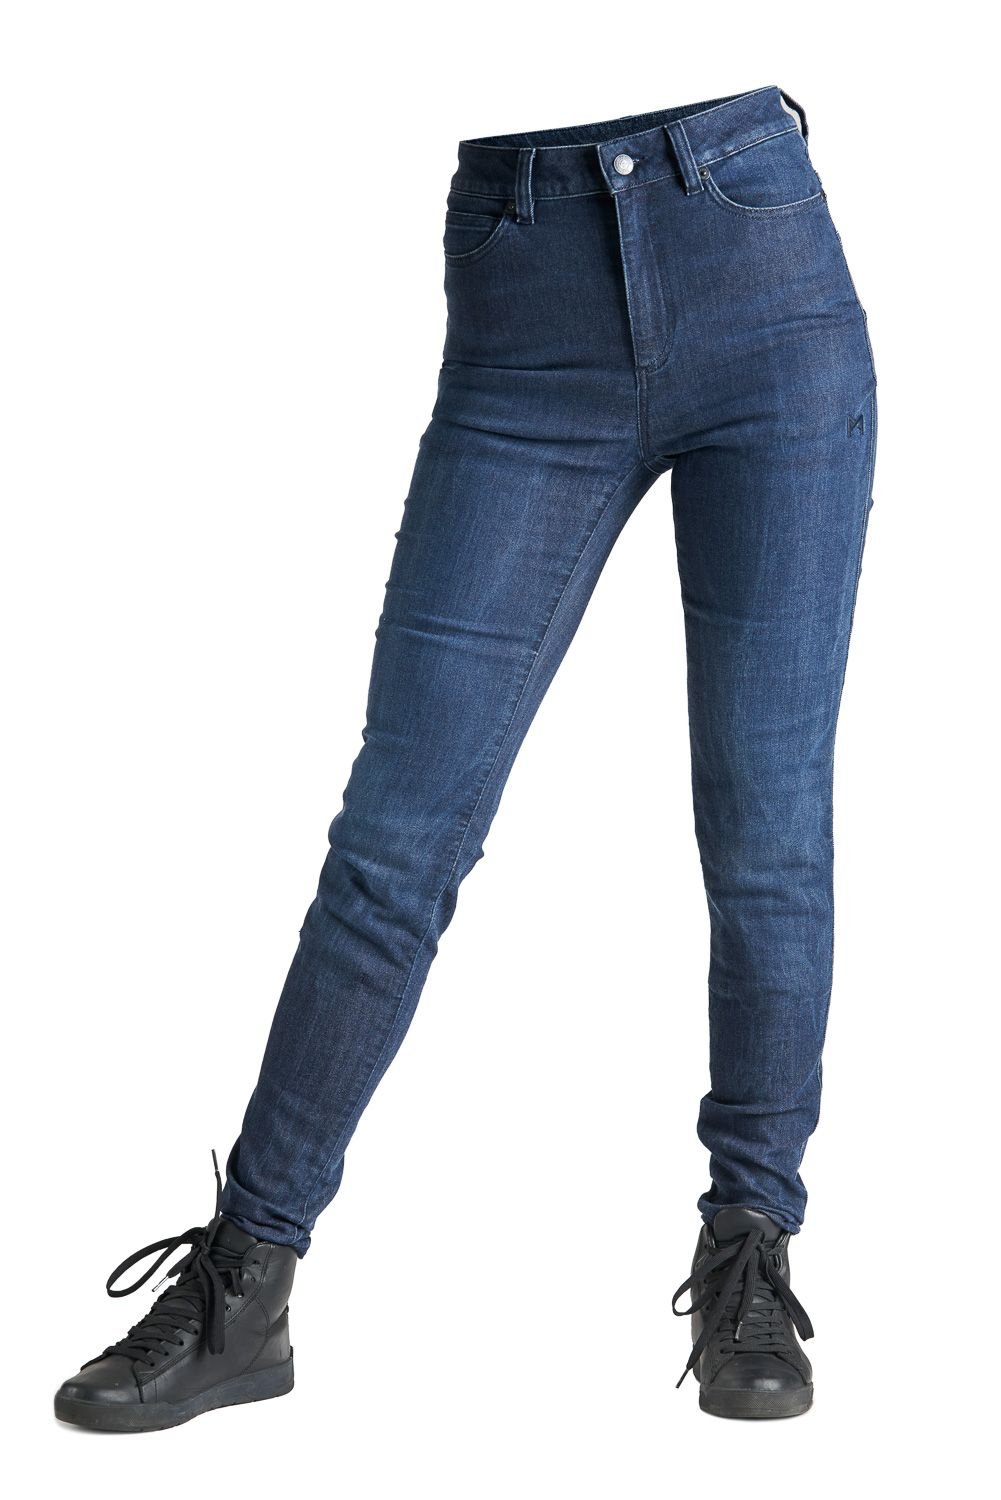 Image of Pando Moto Kusari Cor 02 Women Motorcycle Jeans Skinny-Fit Cordura Size W30/L32 EN